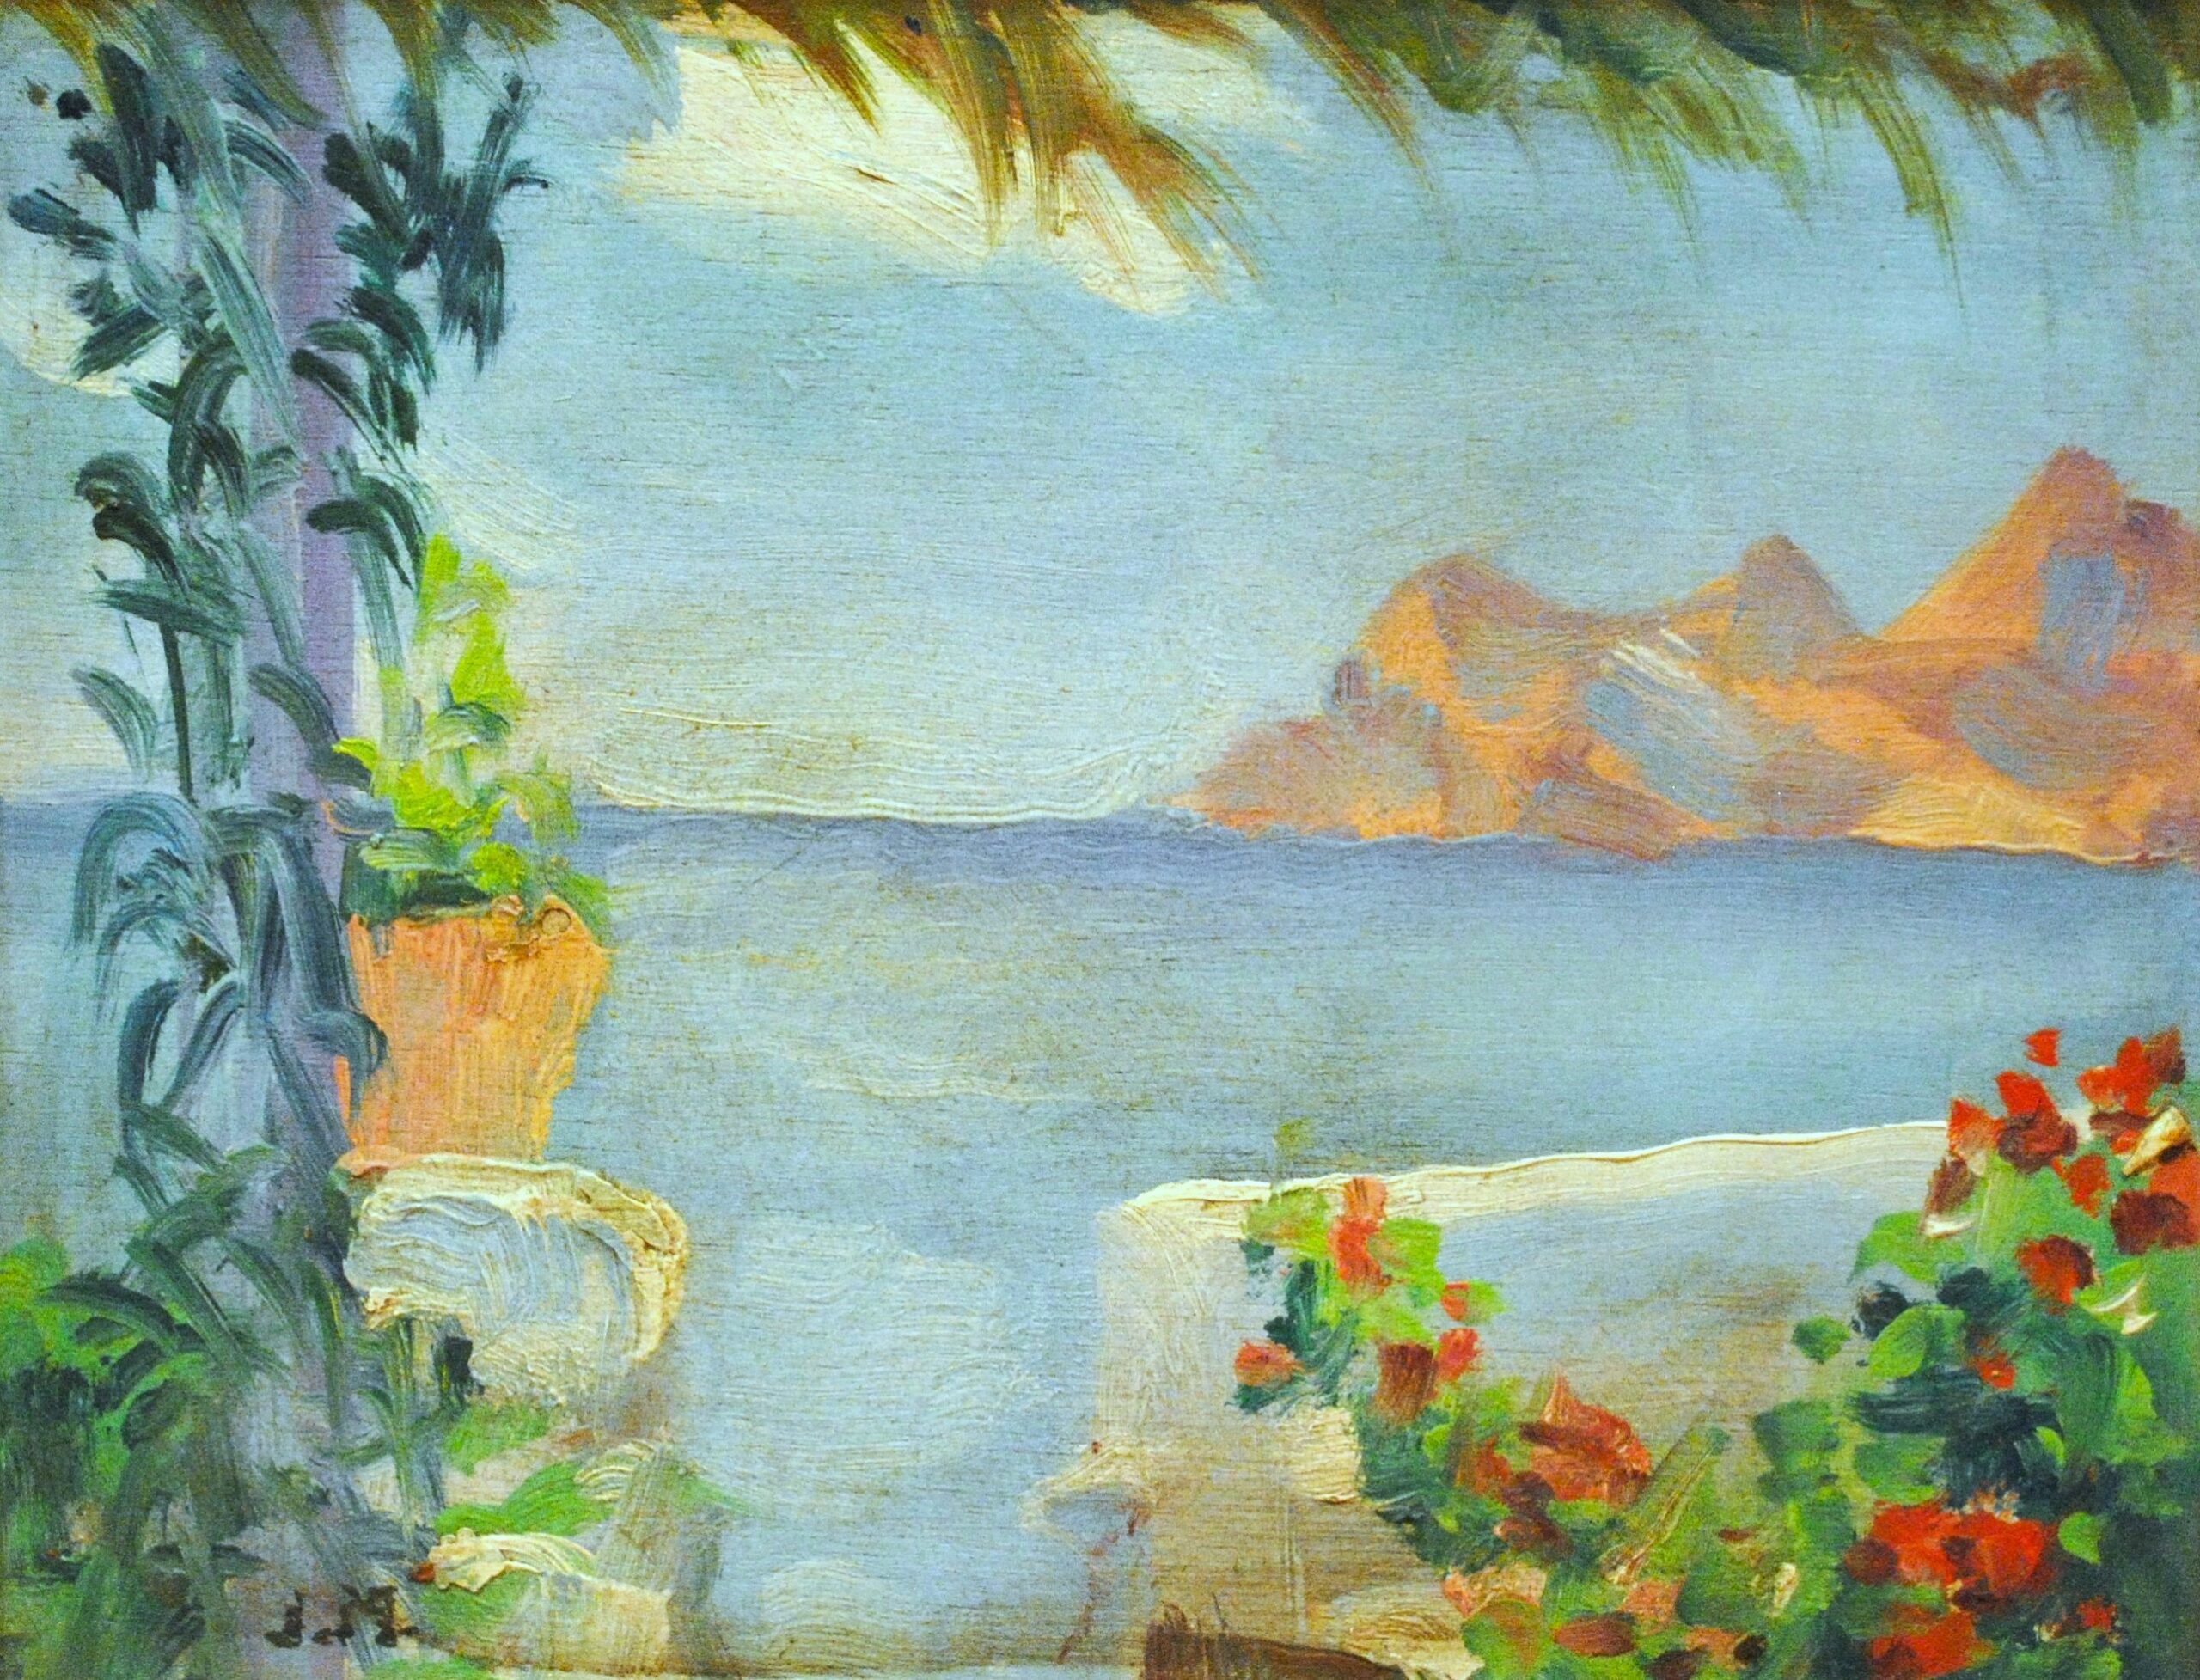 Pintura de José Manaut titulada Costa desde el porche, Altea, 1965. Óleo sobre tabla.